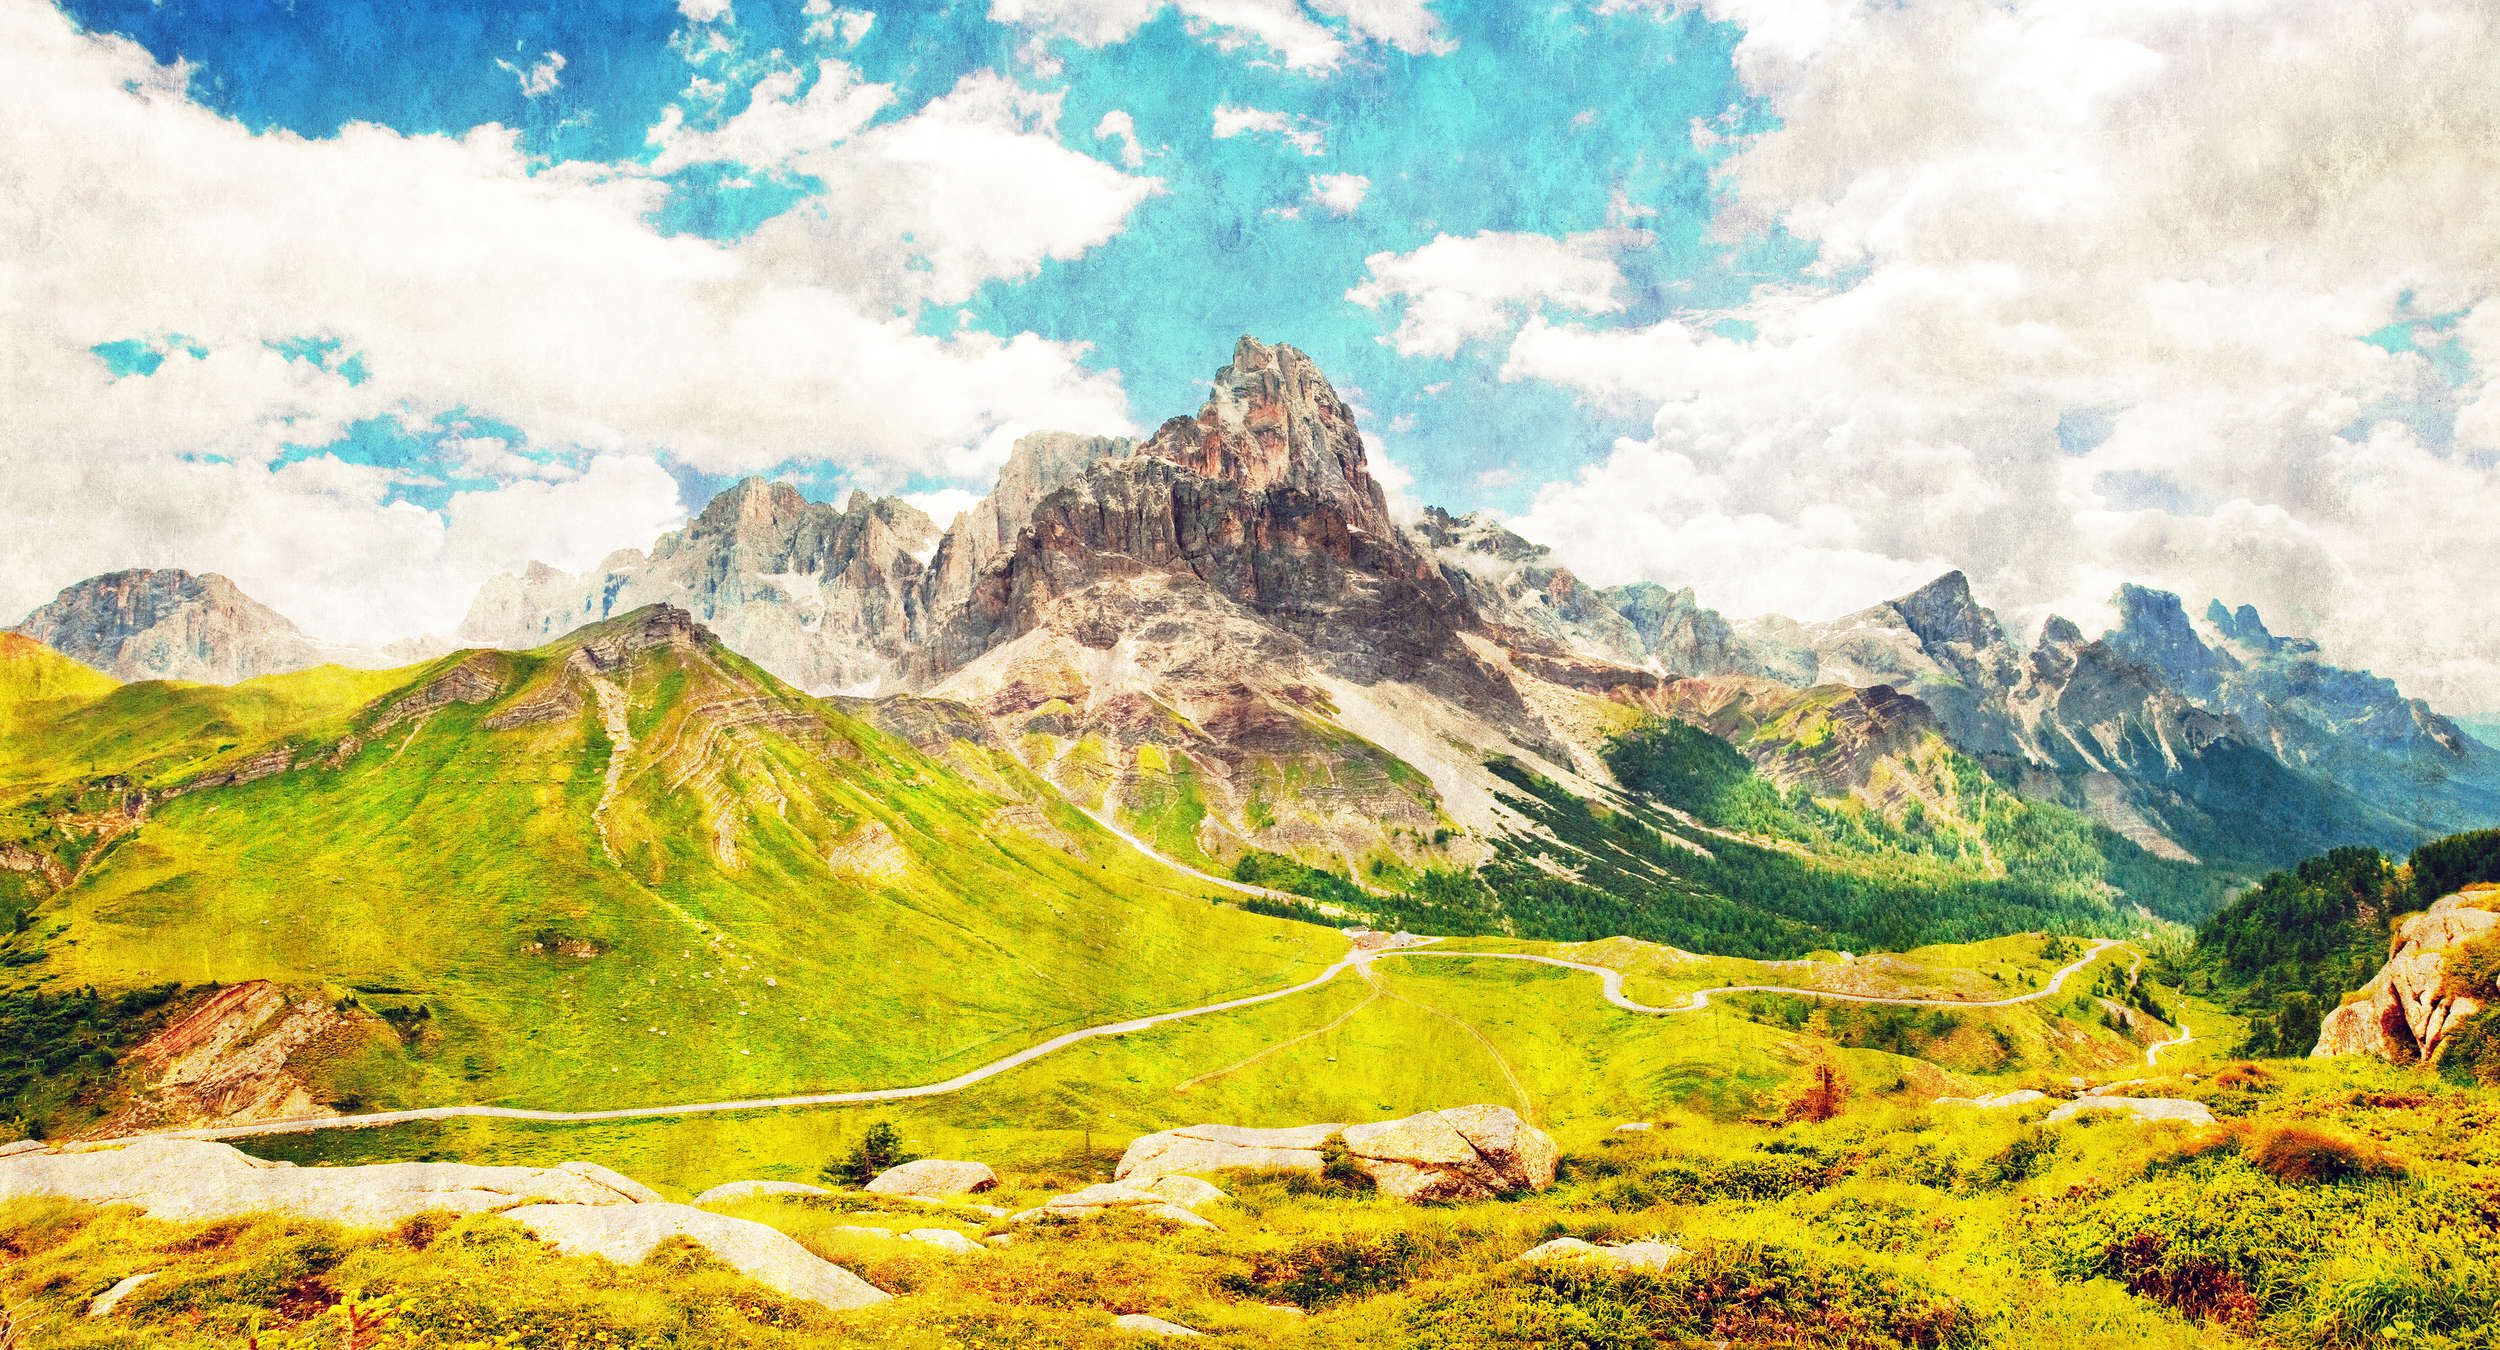             Dolomiti 1 - Fotomurali Dolomiti Fotografia Retrò - Carta assorbente - Blu, Verde | Premium Smooth Fleece
        